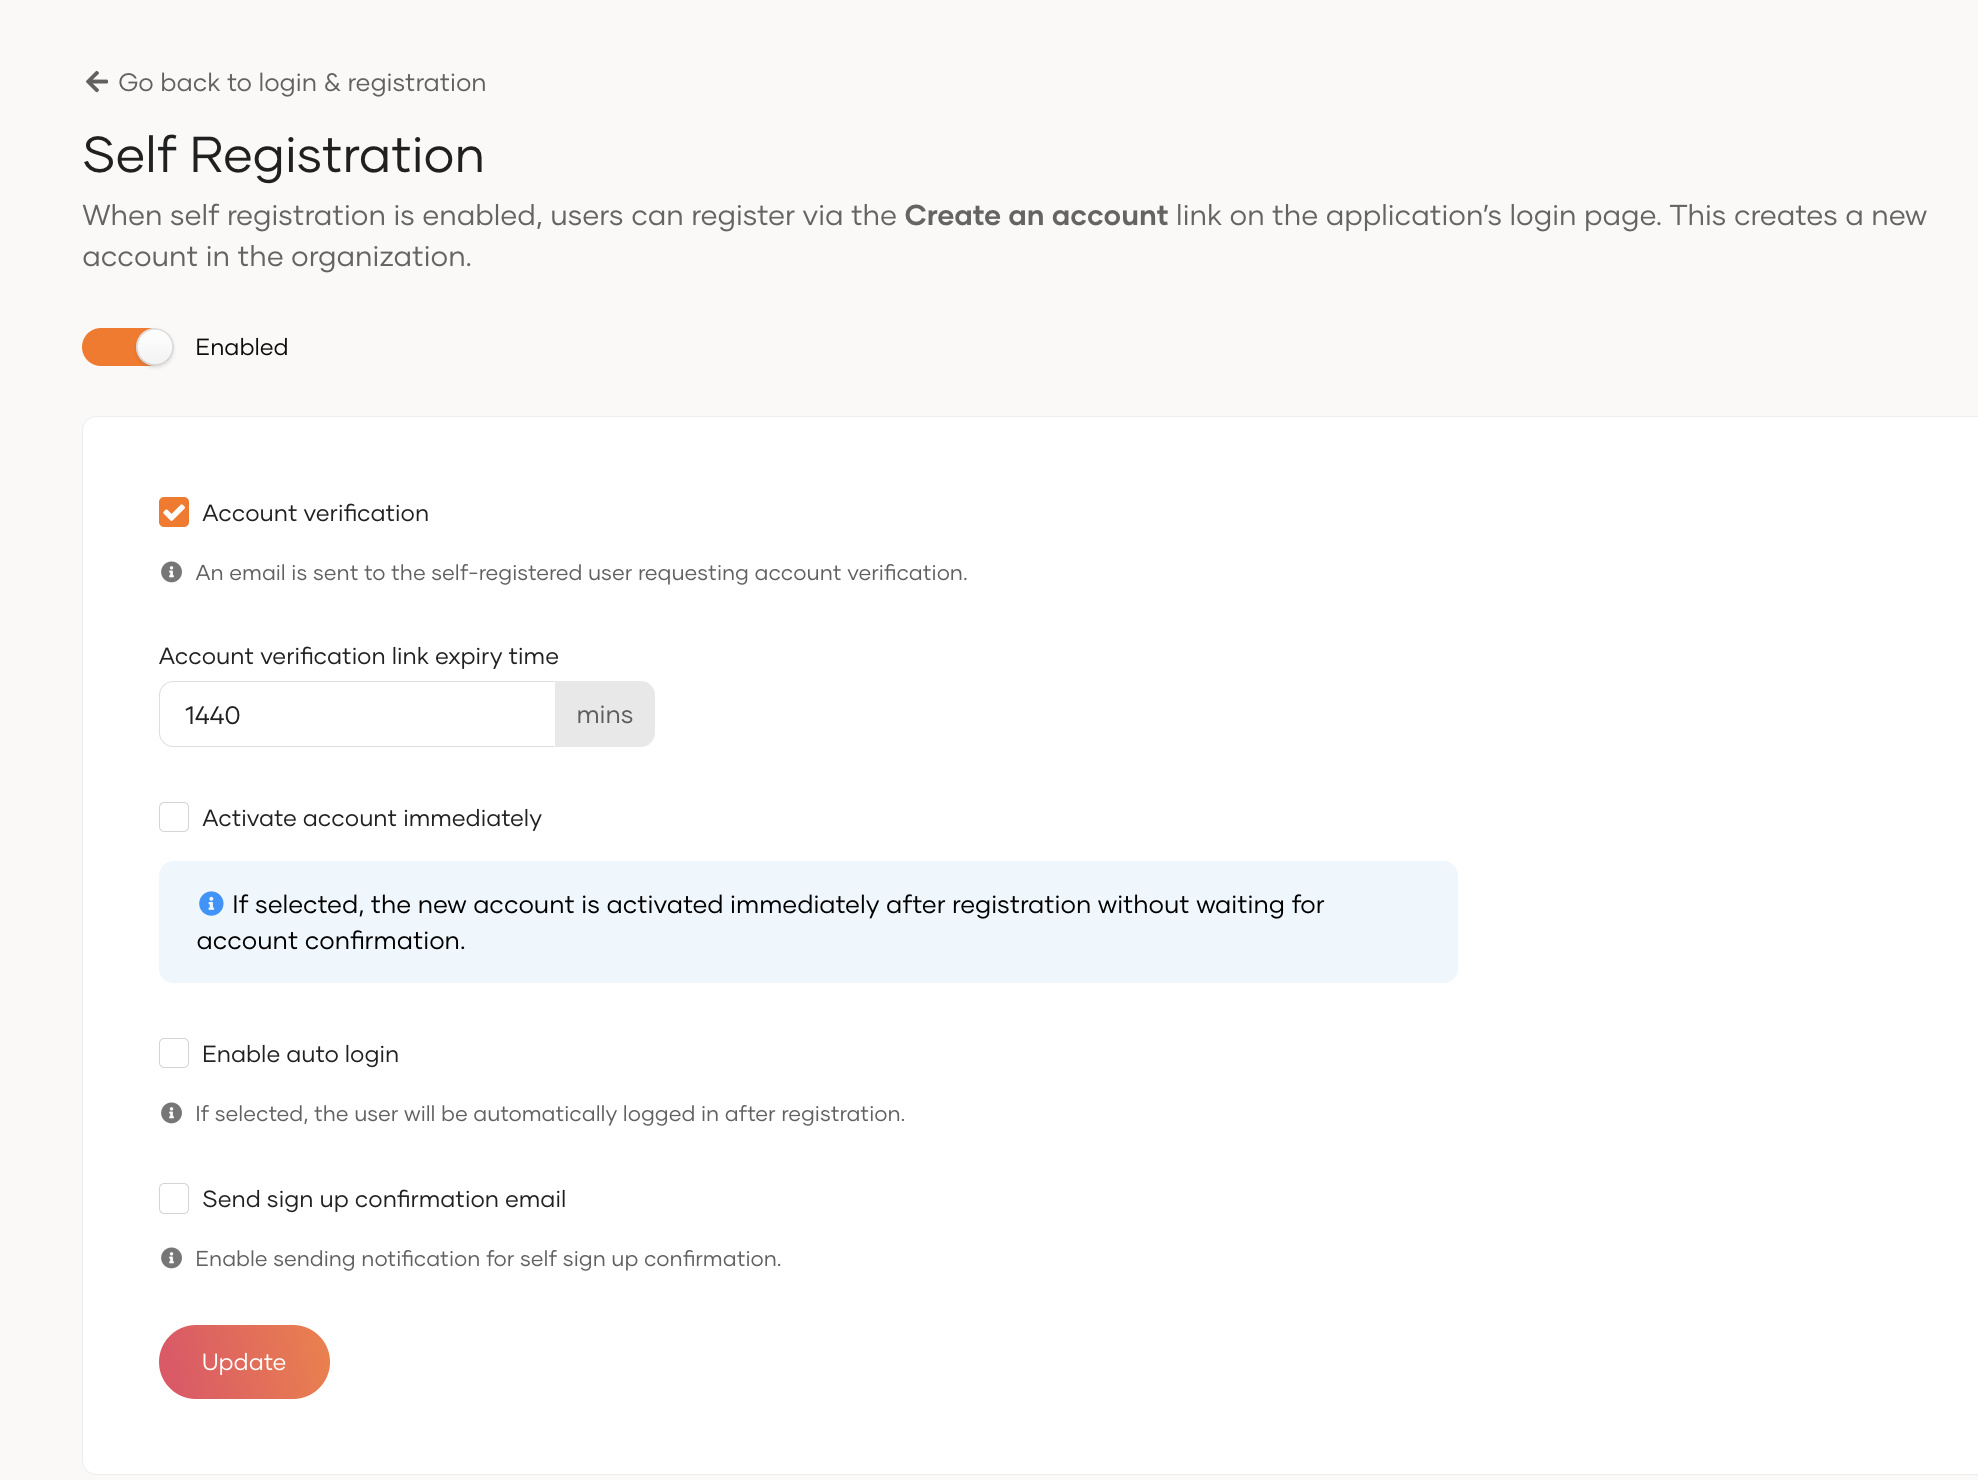 Self Registration Configuration